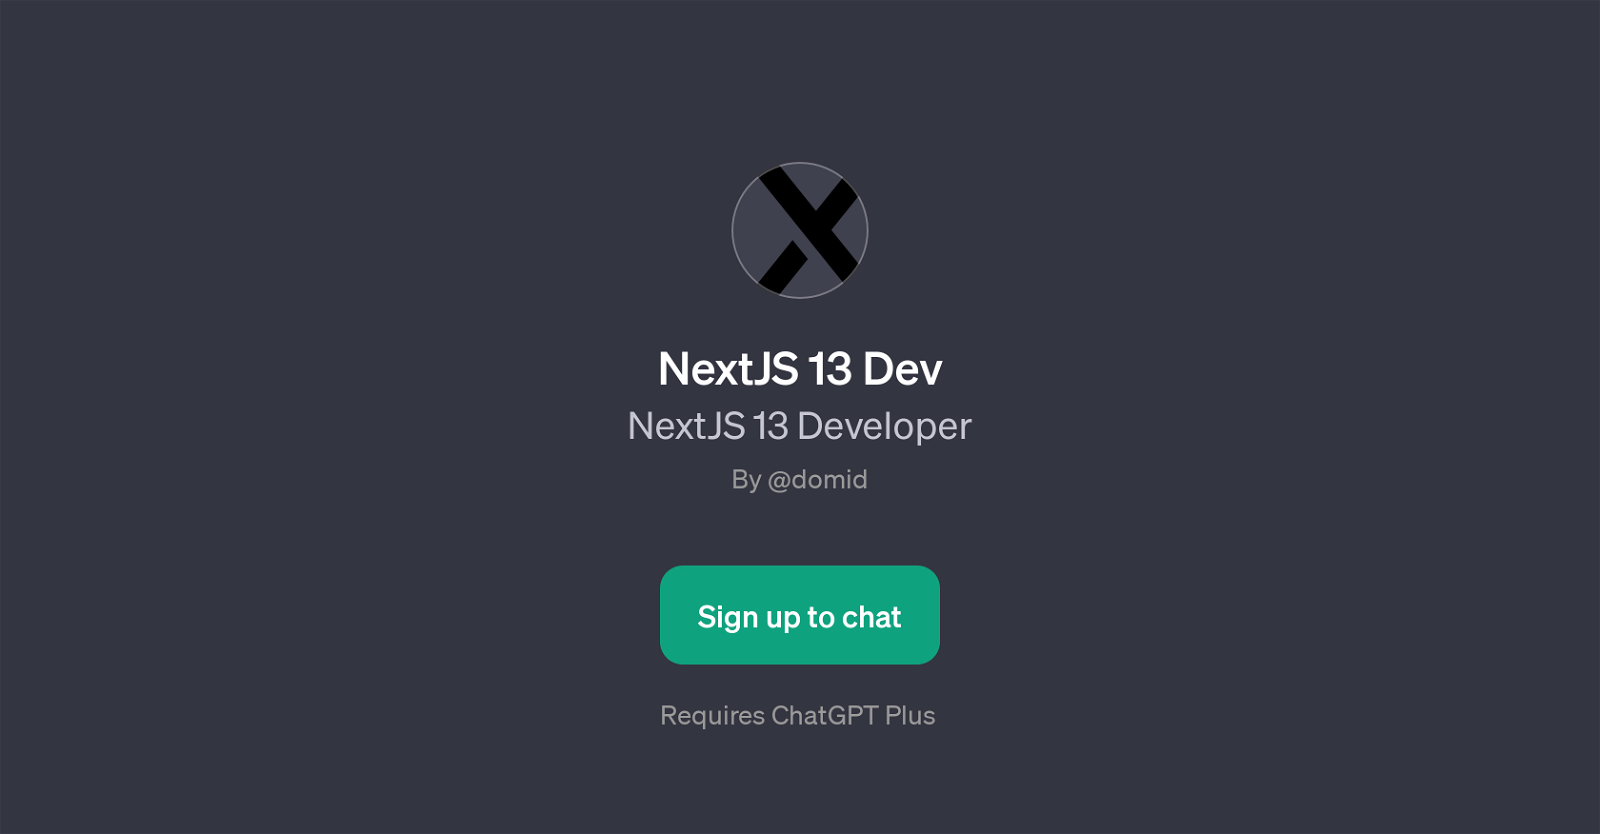 NextJS 13 Dev website